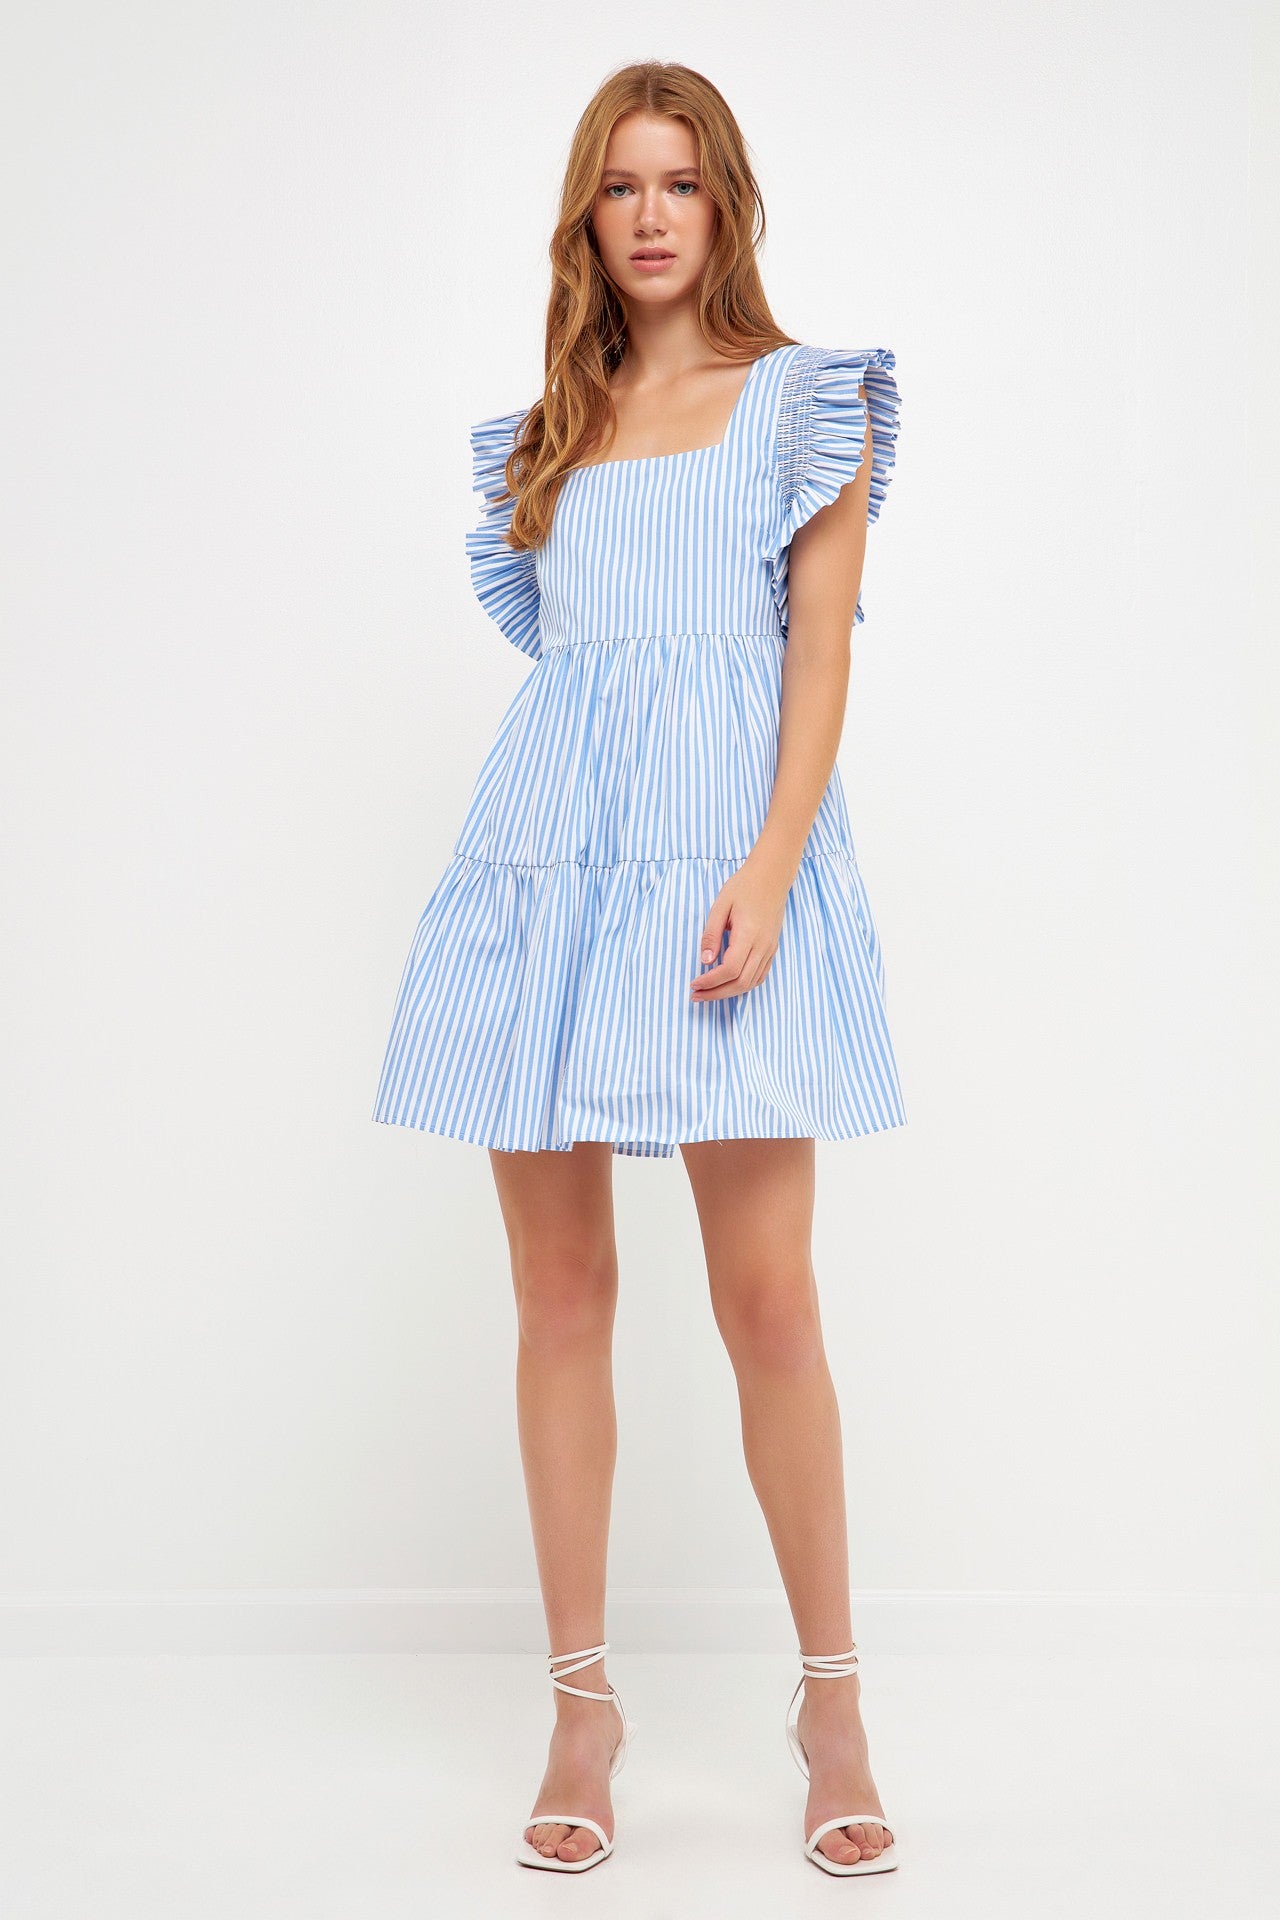 Blue and White Stripe Mini Dress